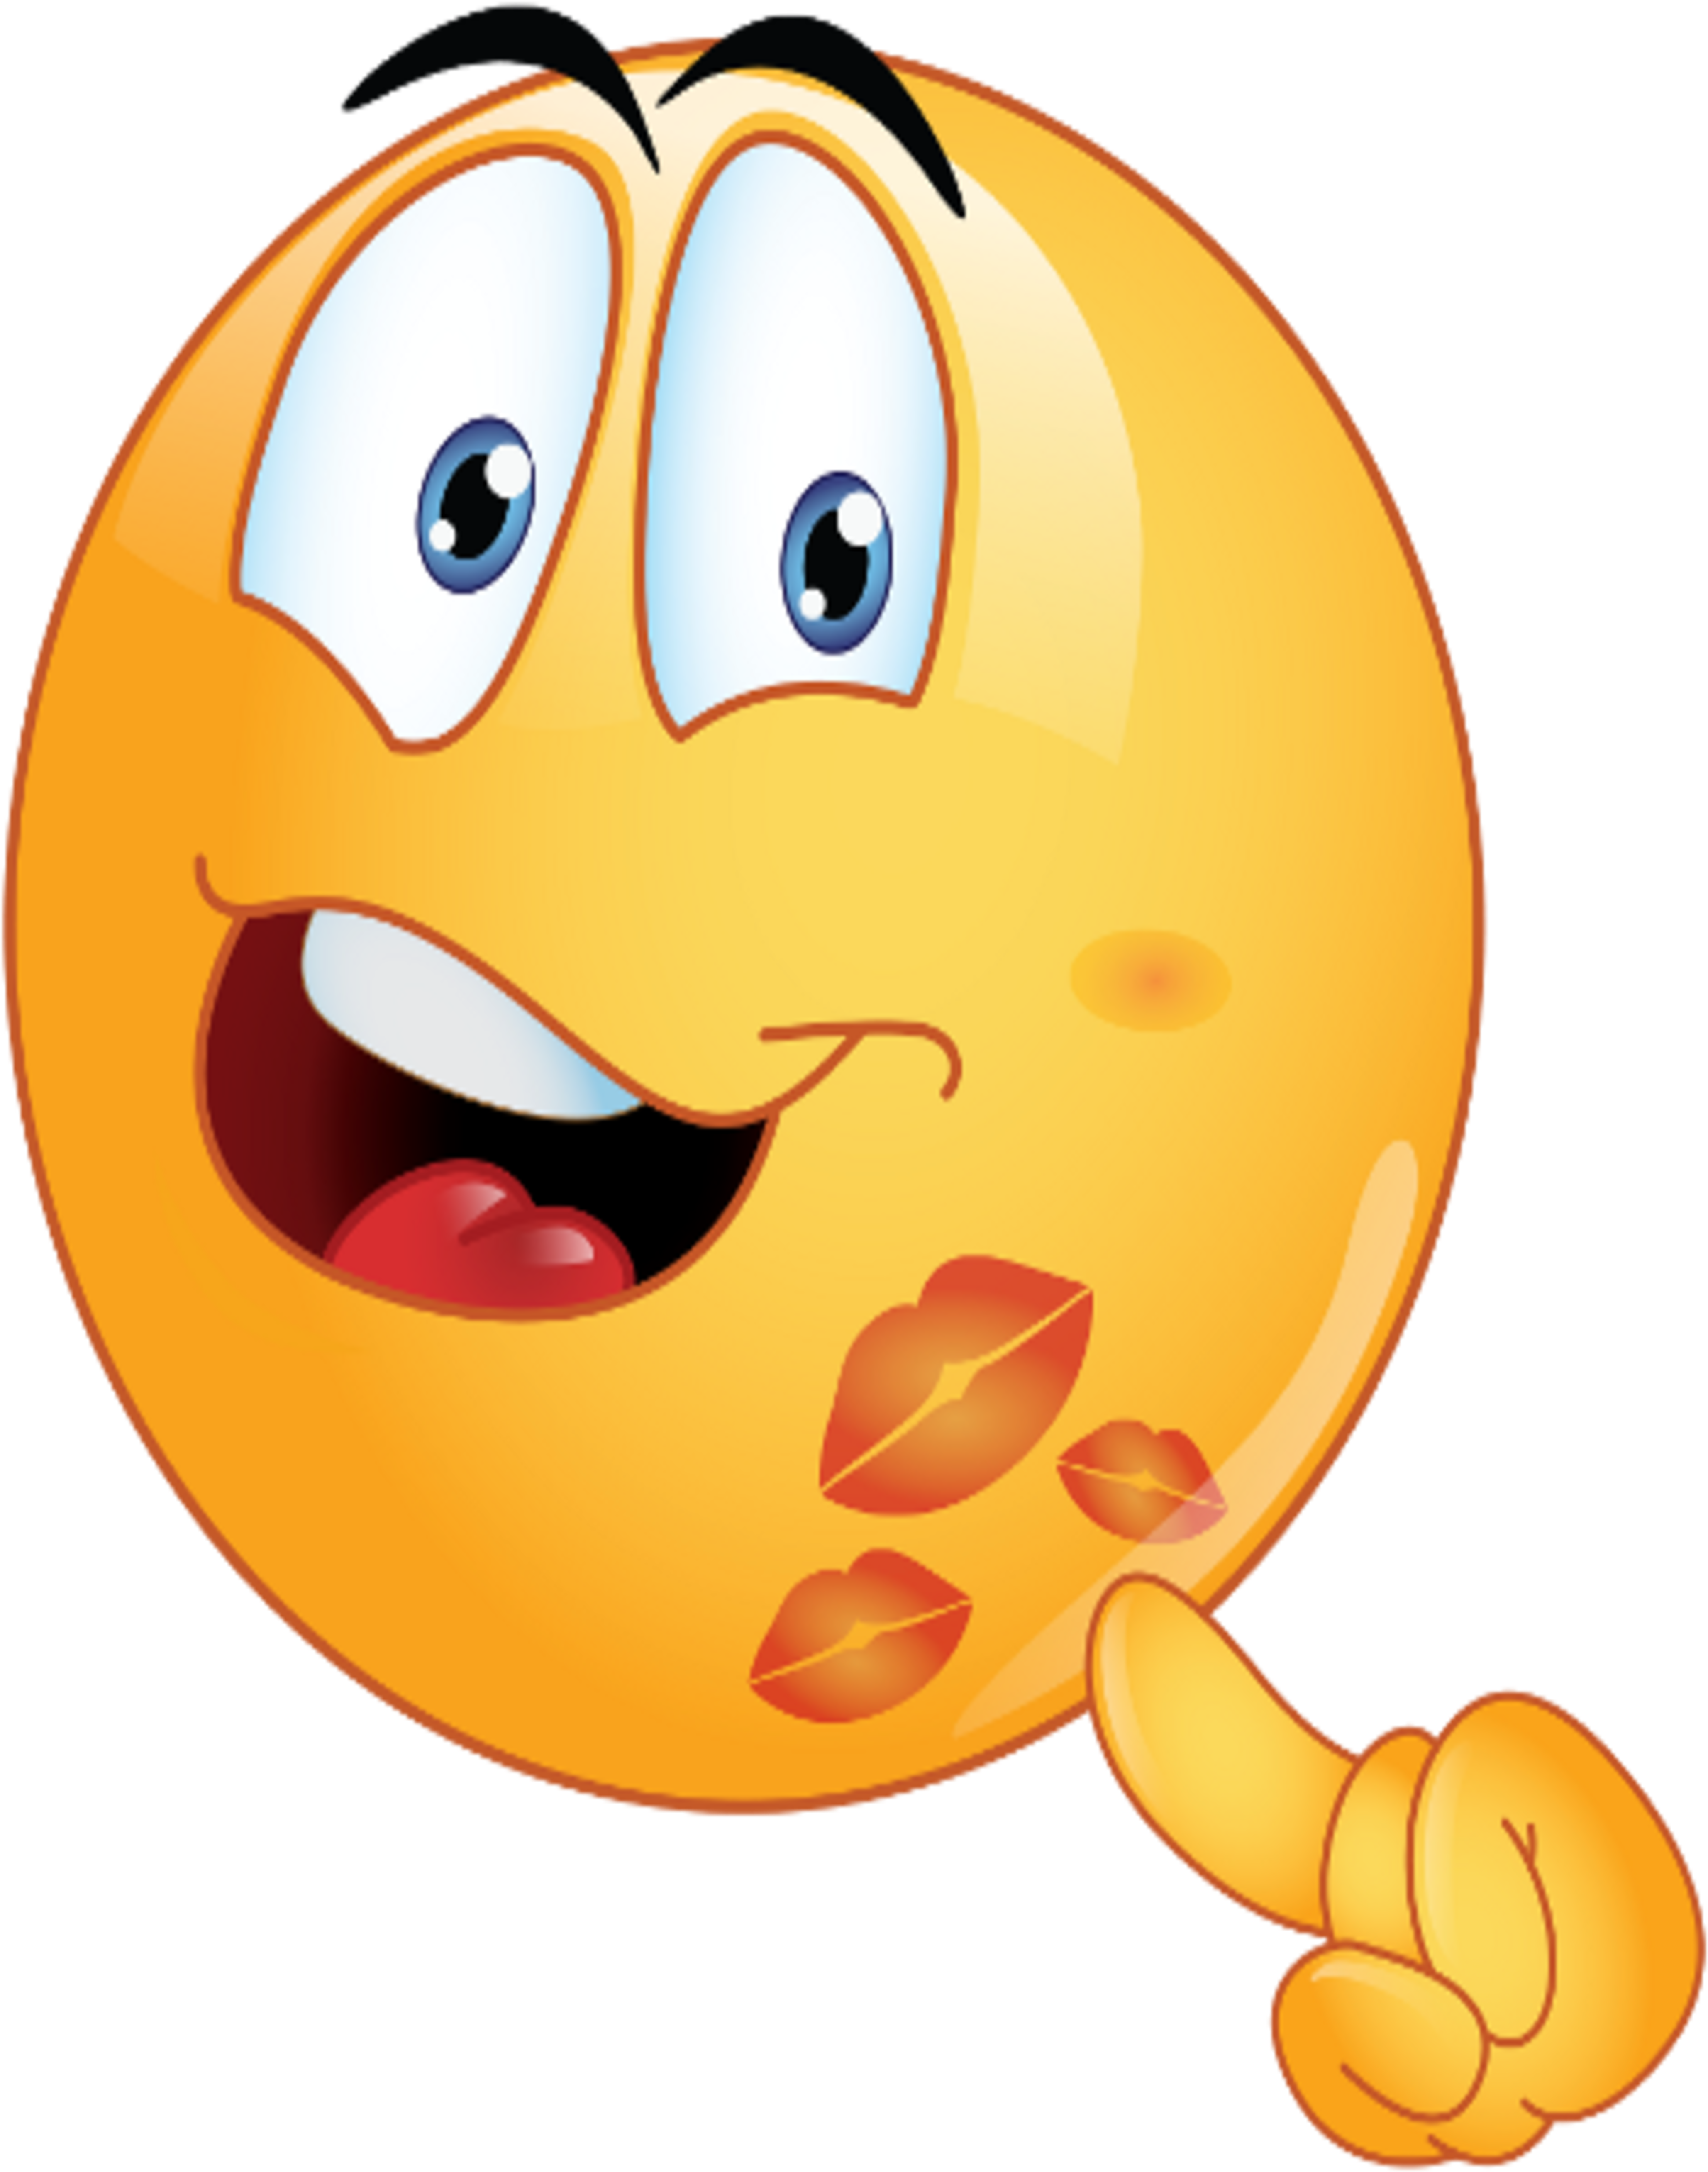 Give Me A Kiss Coffee Mug Naughty Emoji, Face Icon, - Dirty Emojis Free, Hd Png Download